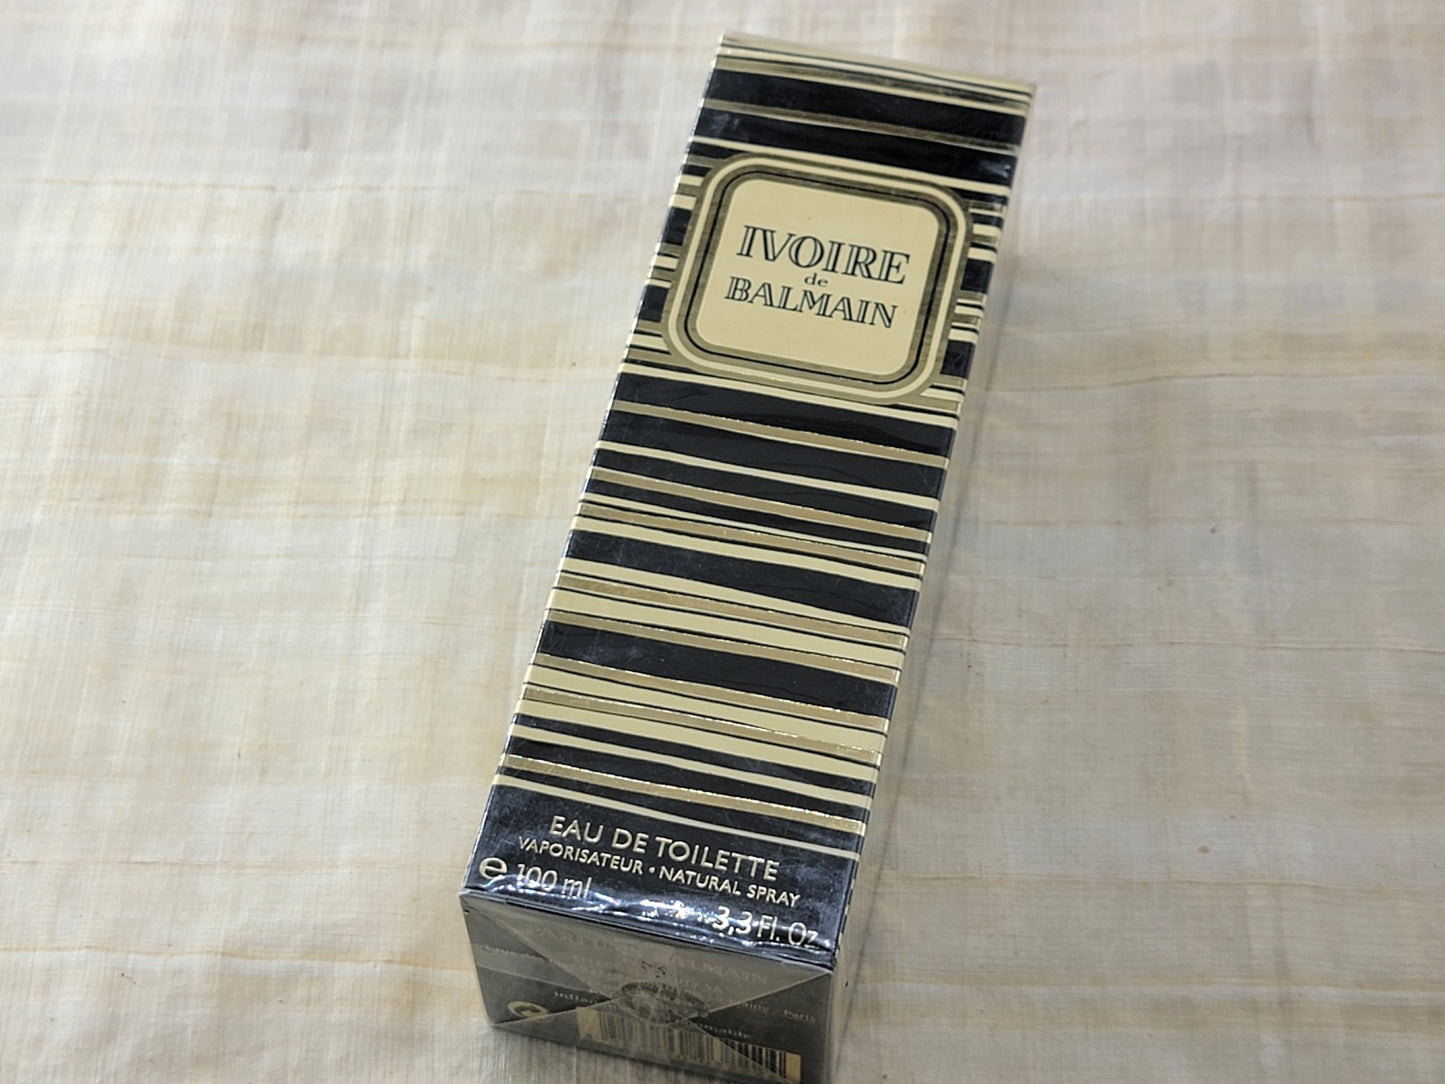 Ivoire De Balmain Pierre for Women EDT Spray 100 ml 3.4 oz, Rare, Vintage, Sealed